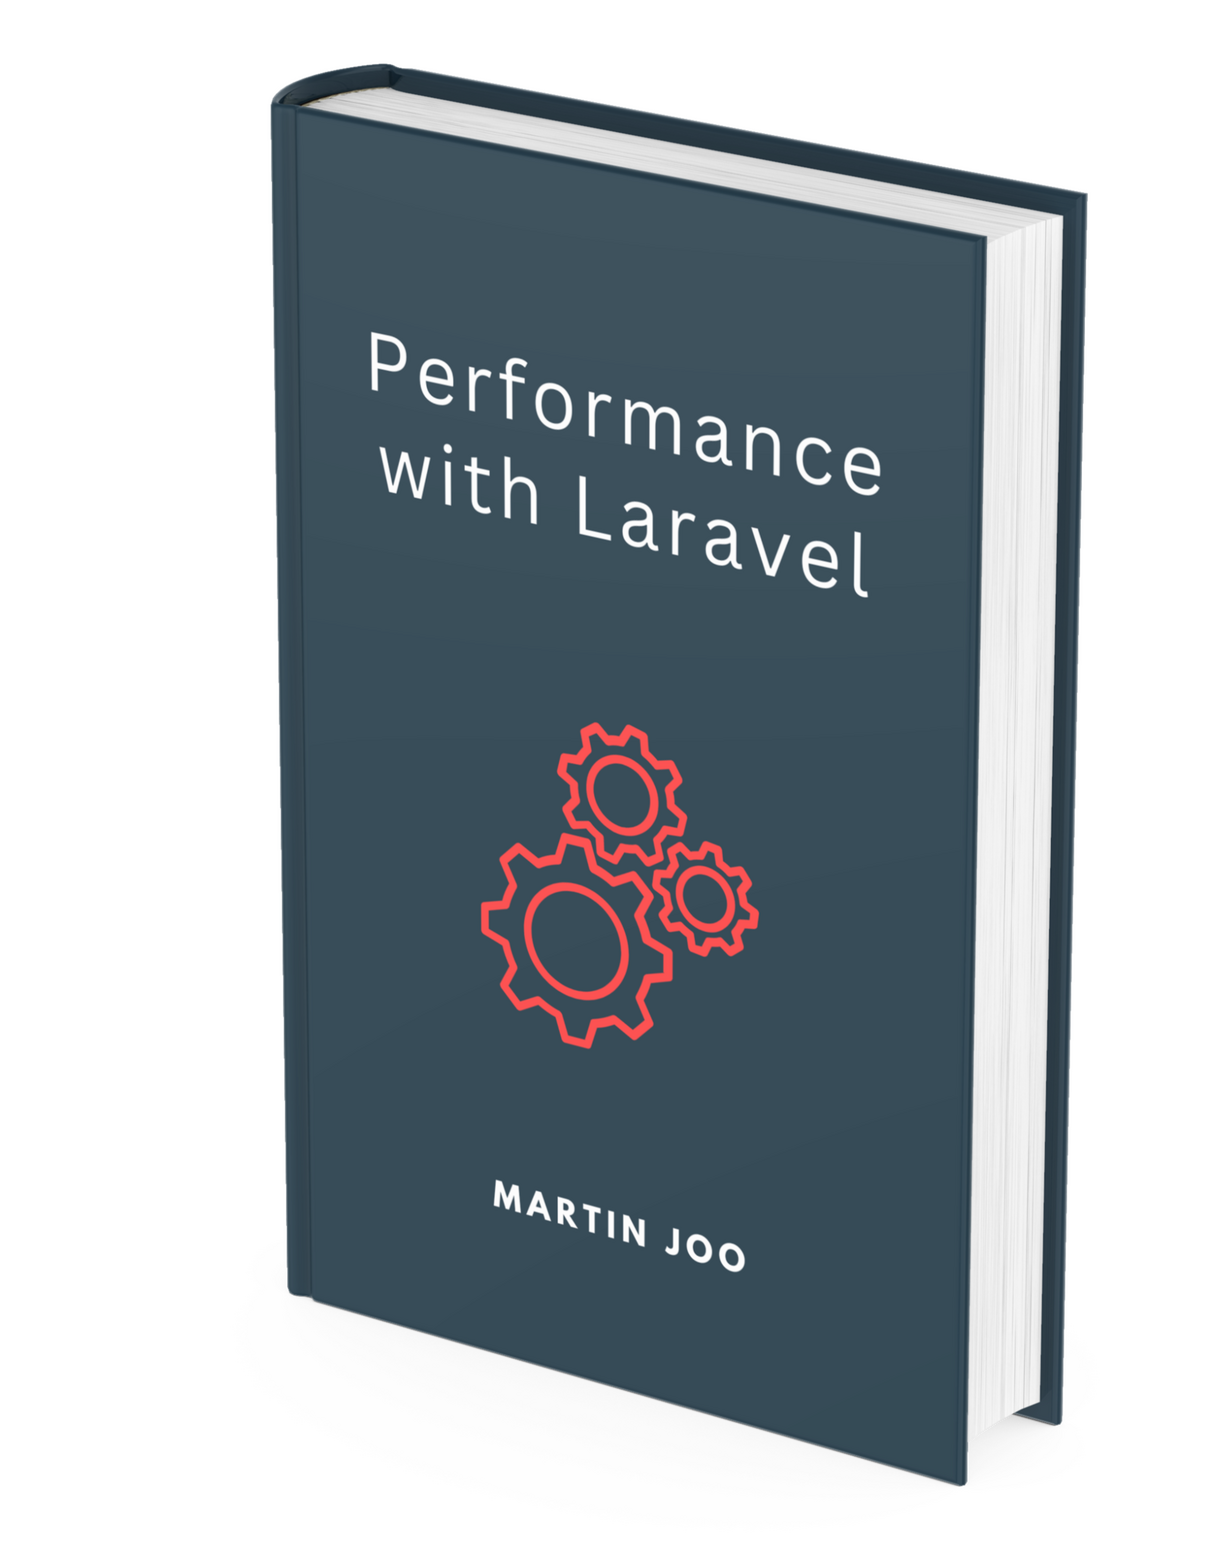 [Ebook] Martin Joo - Performance with Laravel (Premium Package)